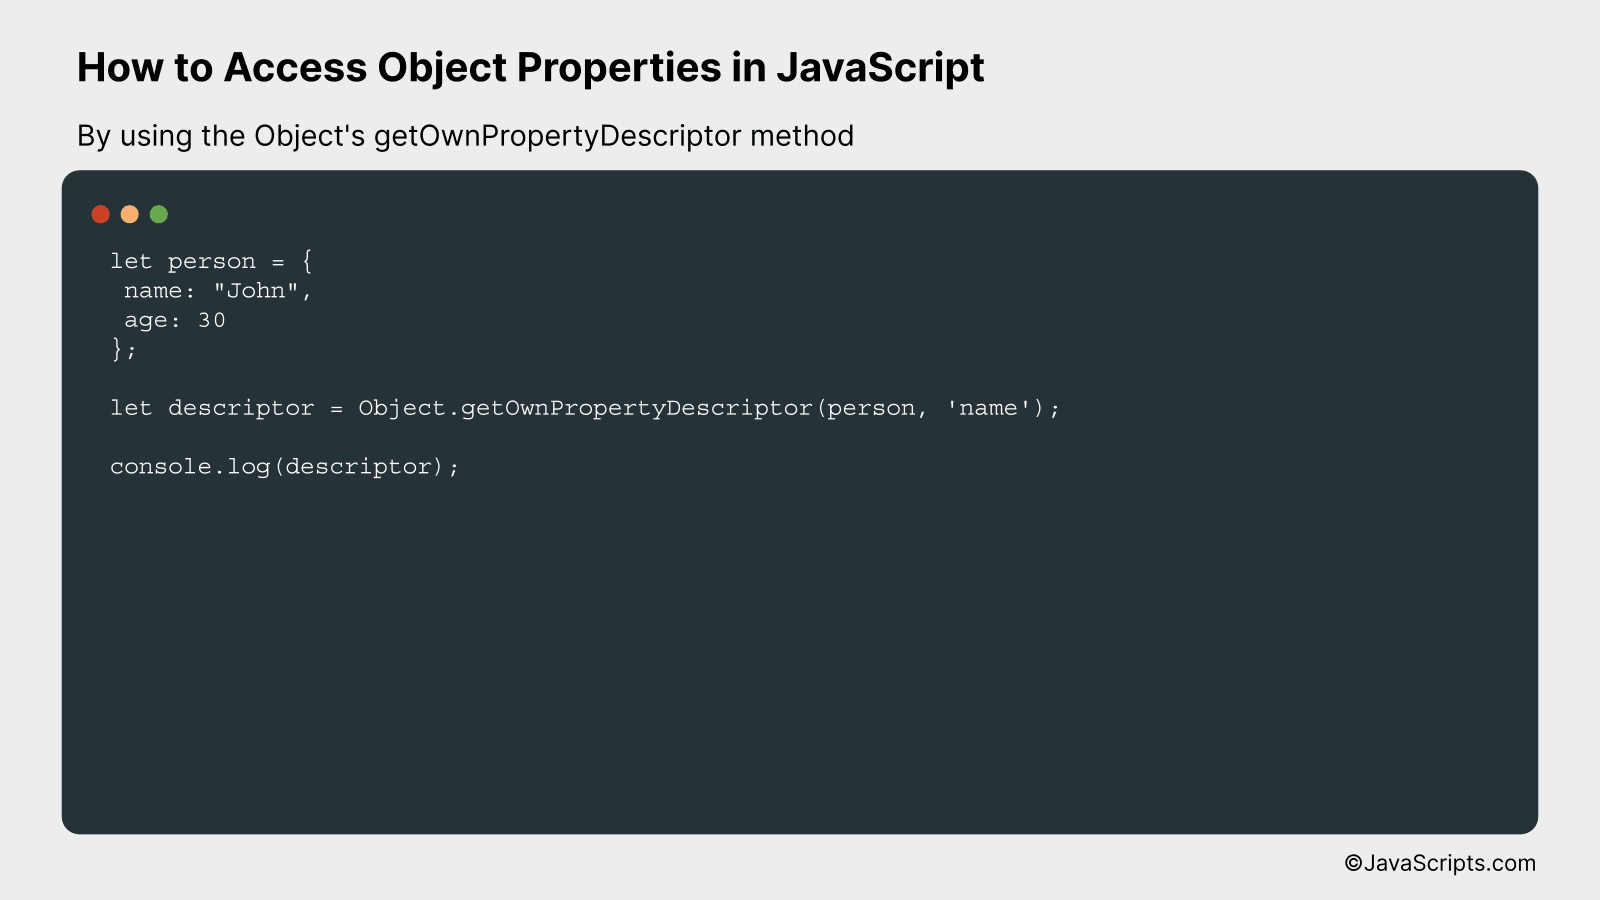 By using the Object's getOwnPropertyDescriptor method